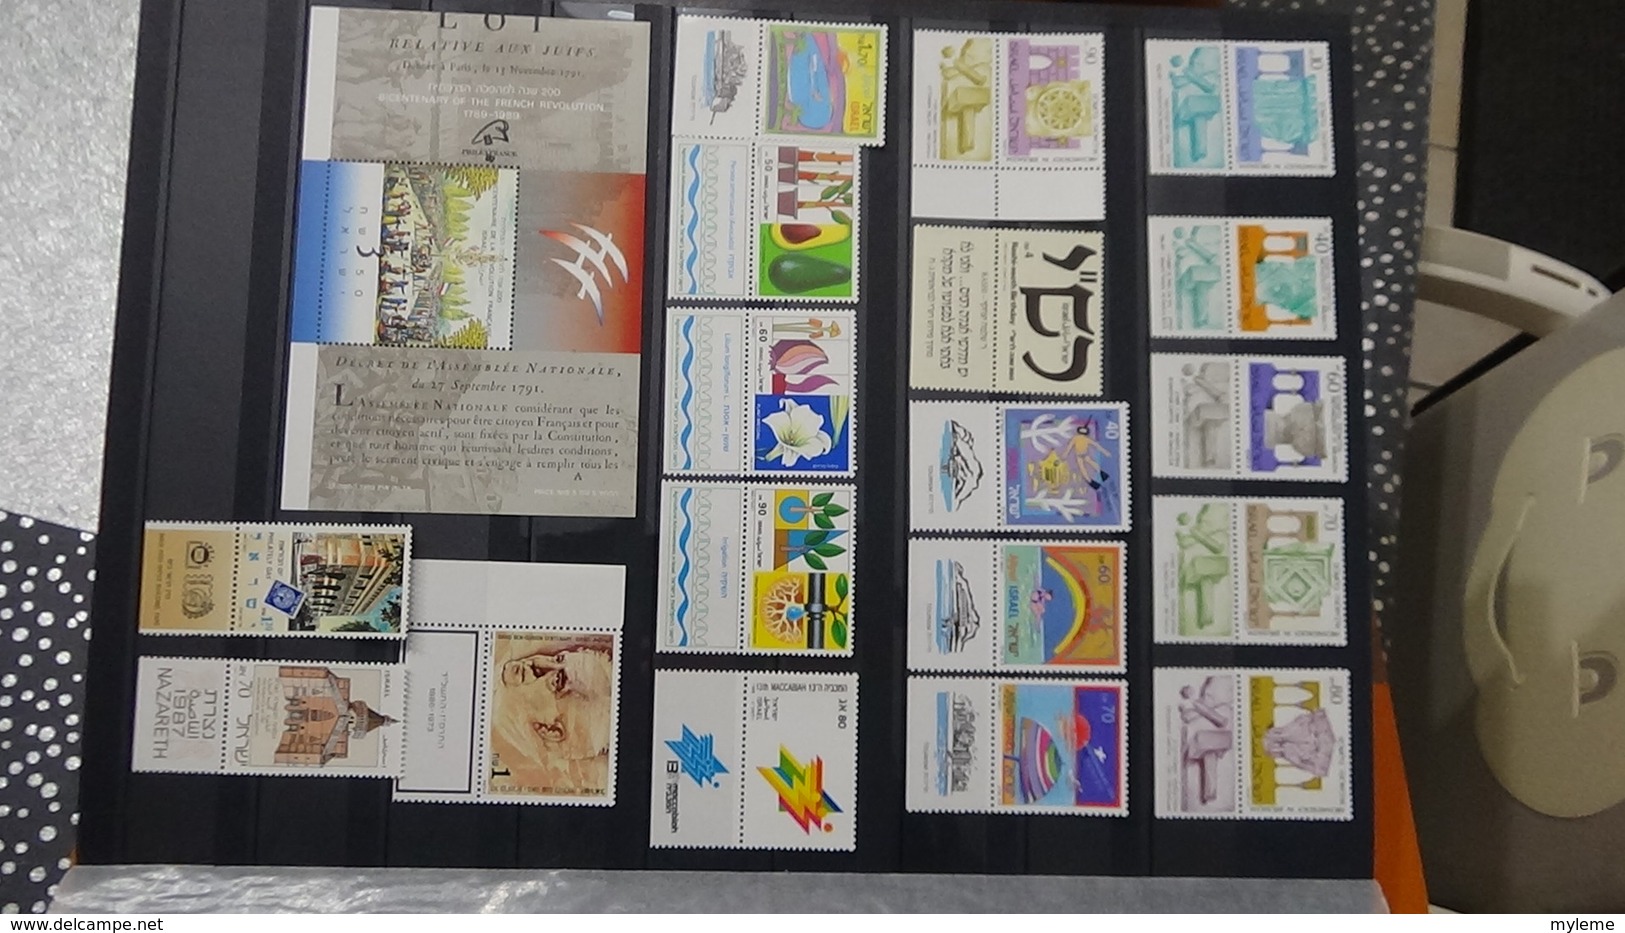 B405 Collection de timbres et blocs ** d'Israël. A sasisir !!!